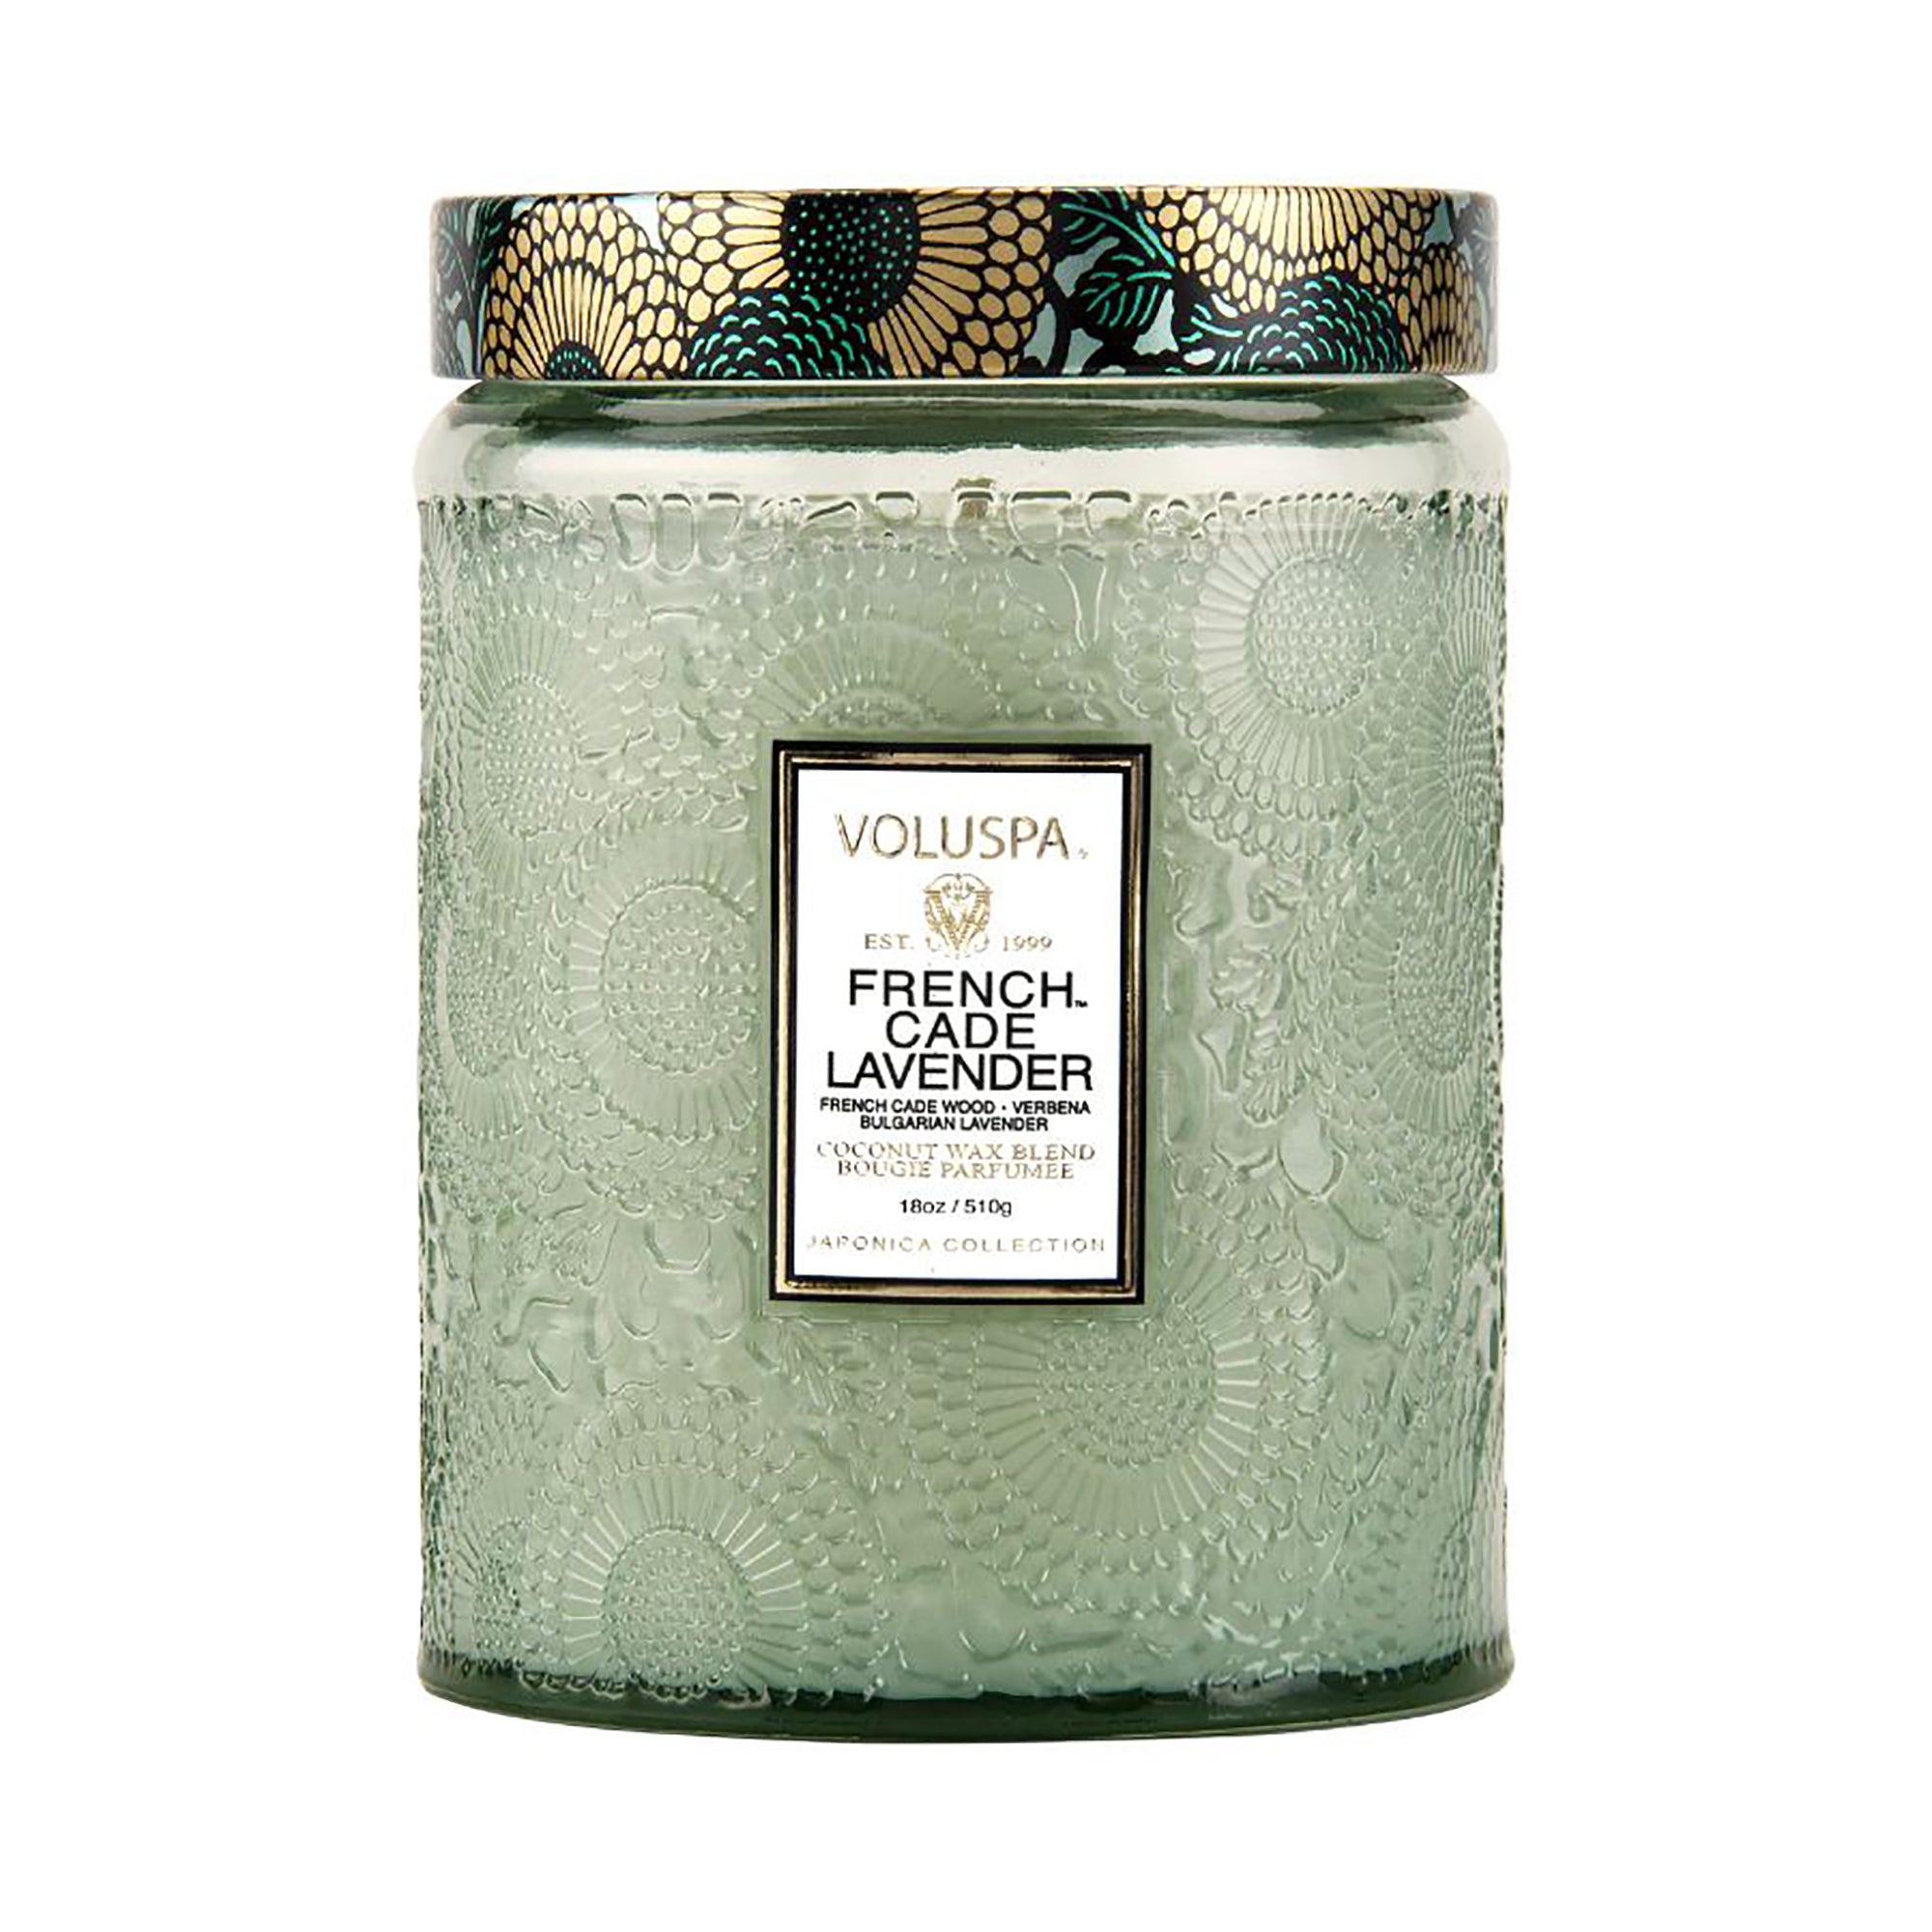 Voluspa Japonica Large Jar Candle 18oz / French Cade Lavender